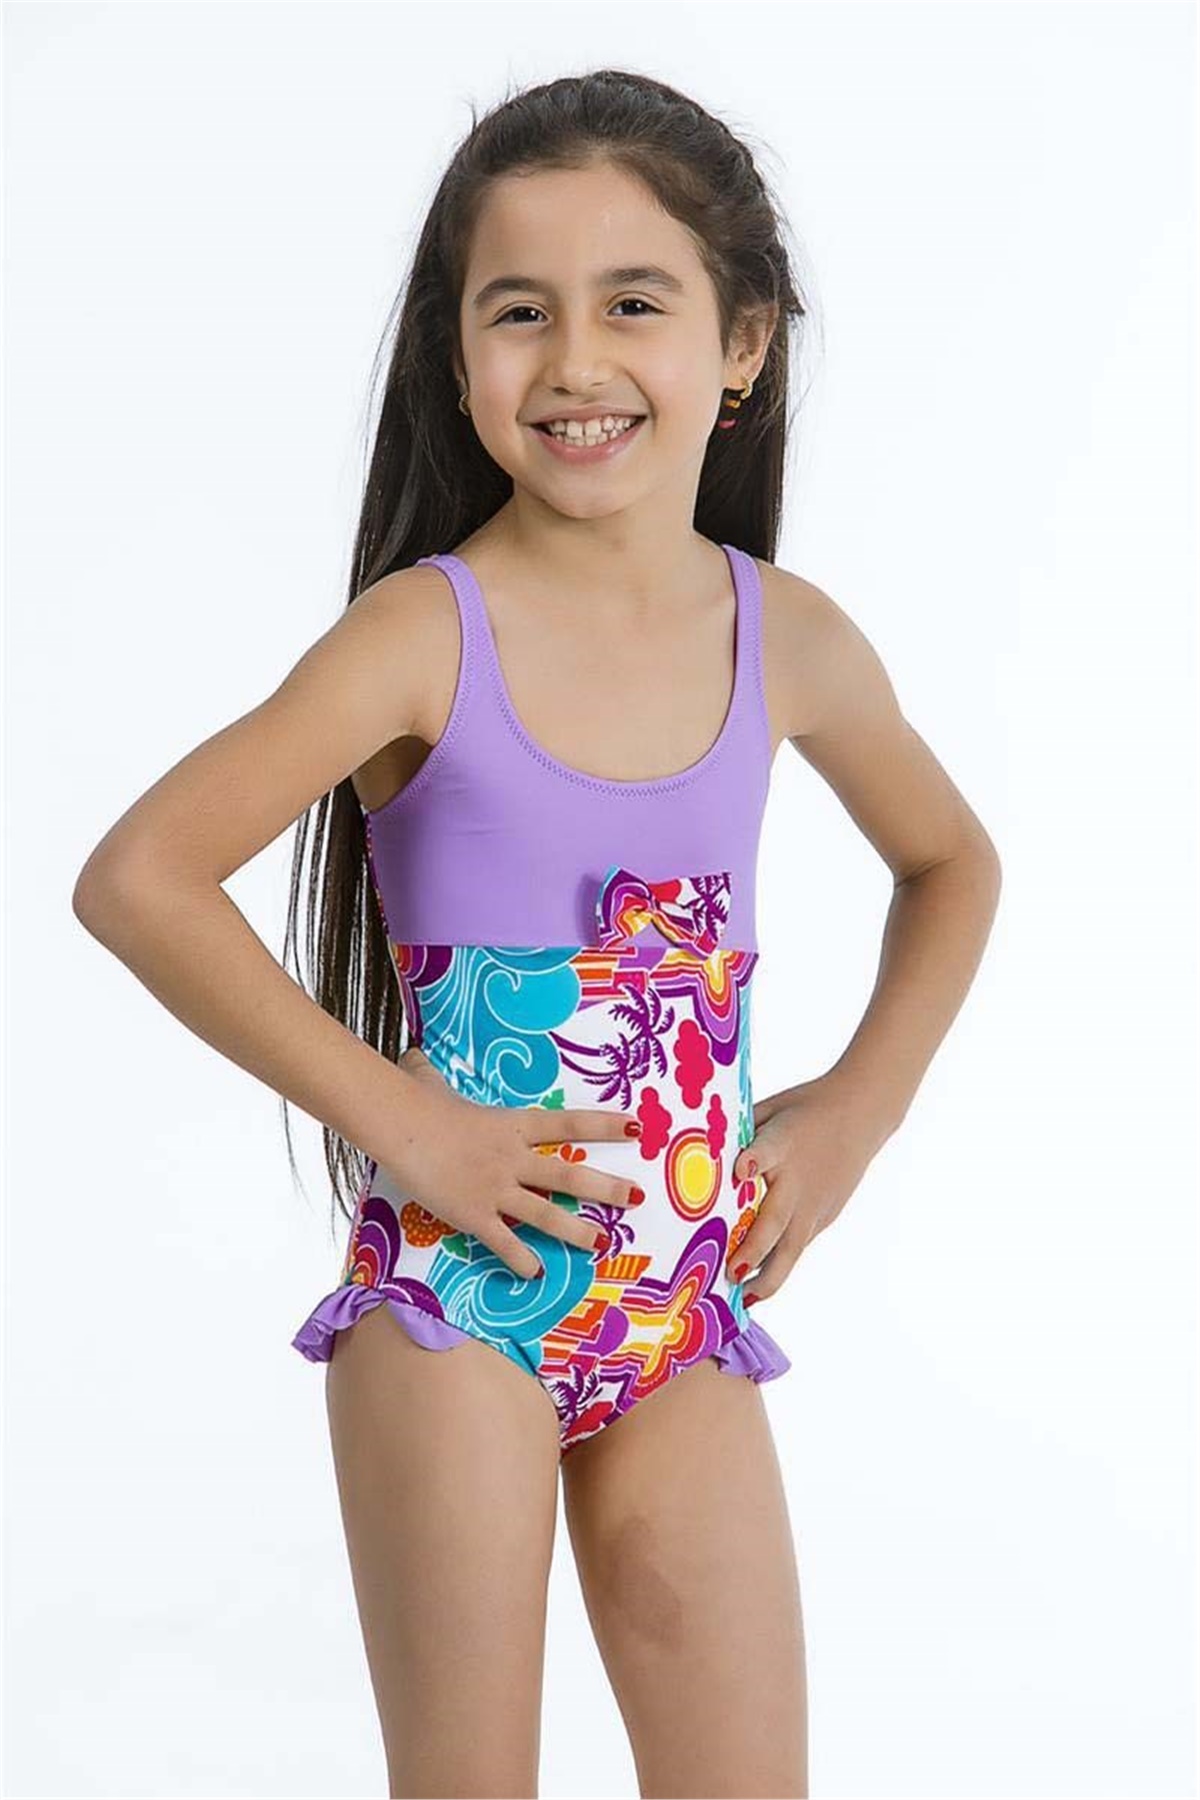 Kız Çocuk Yüzücü Mayo 306811-216